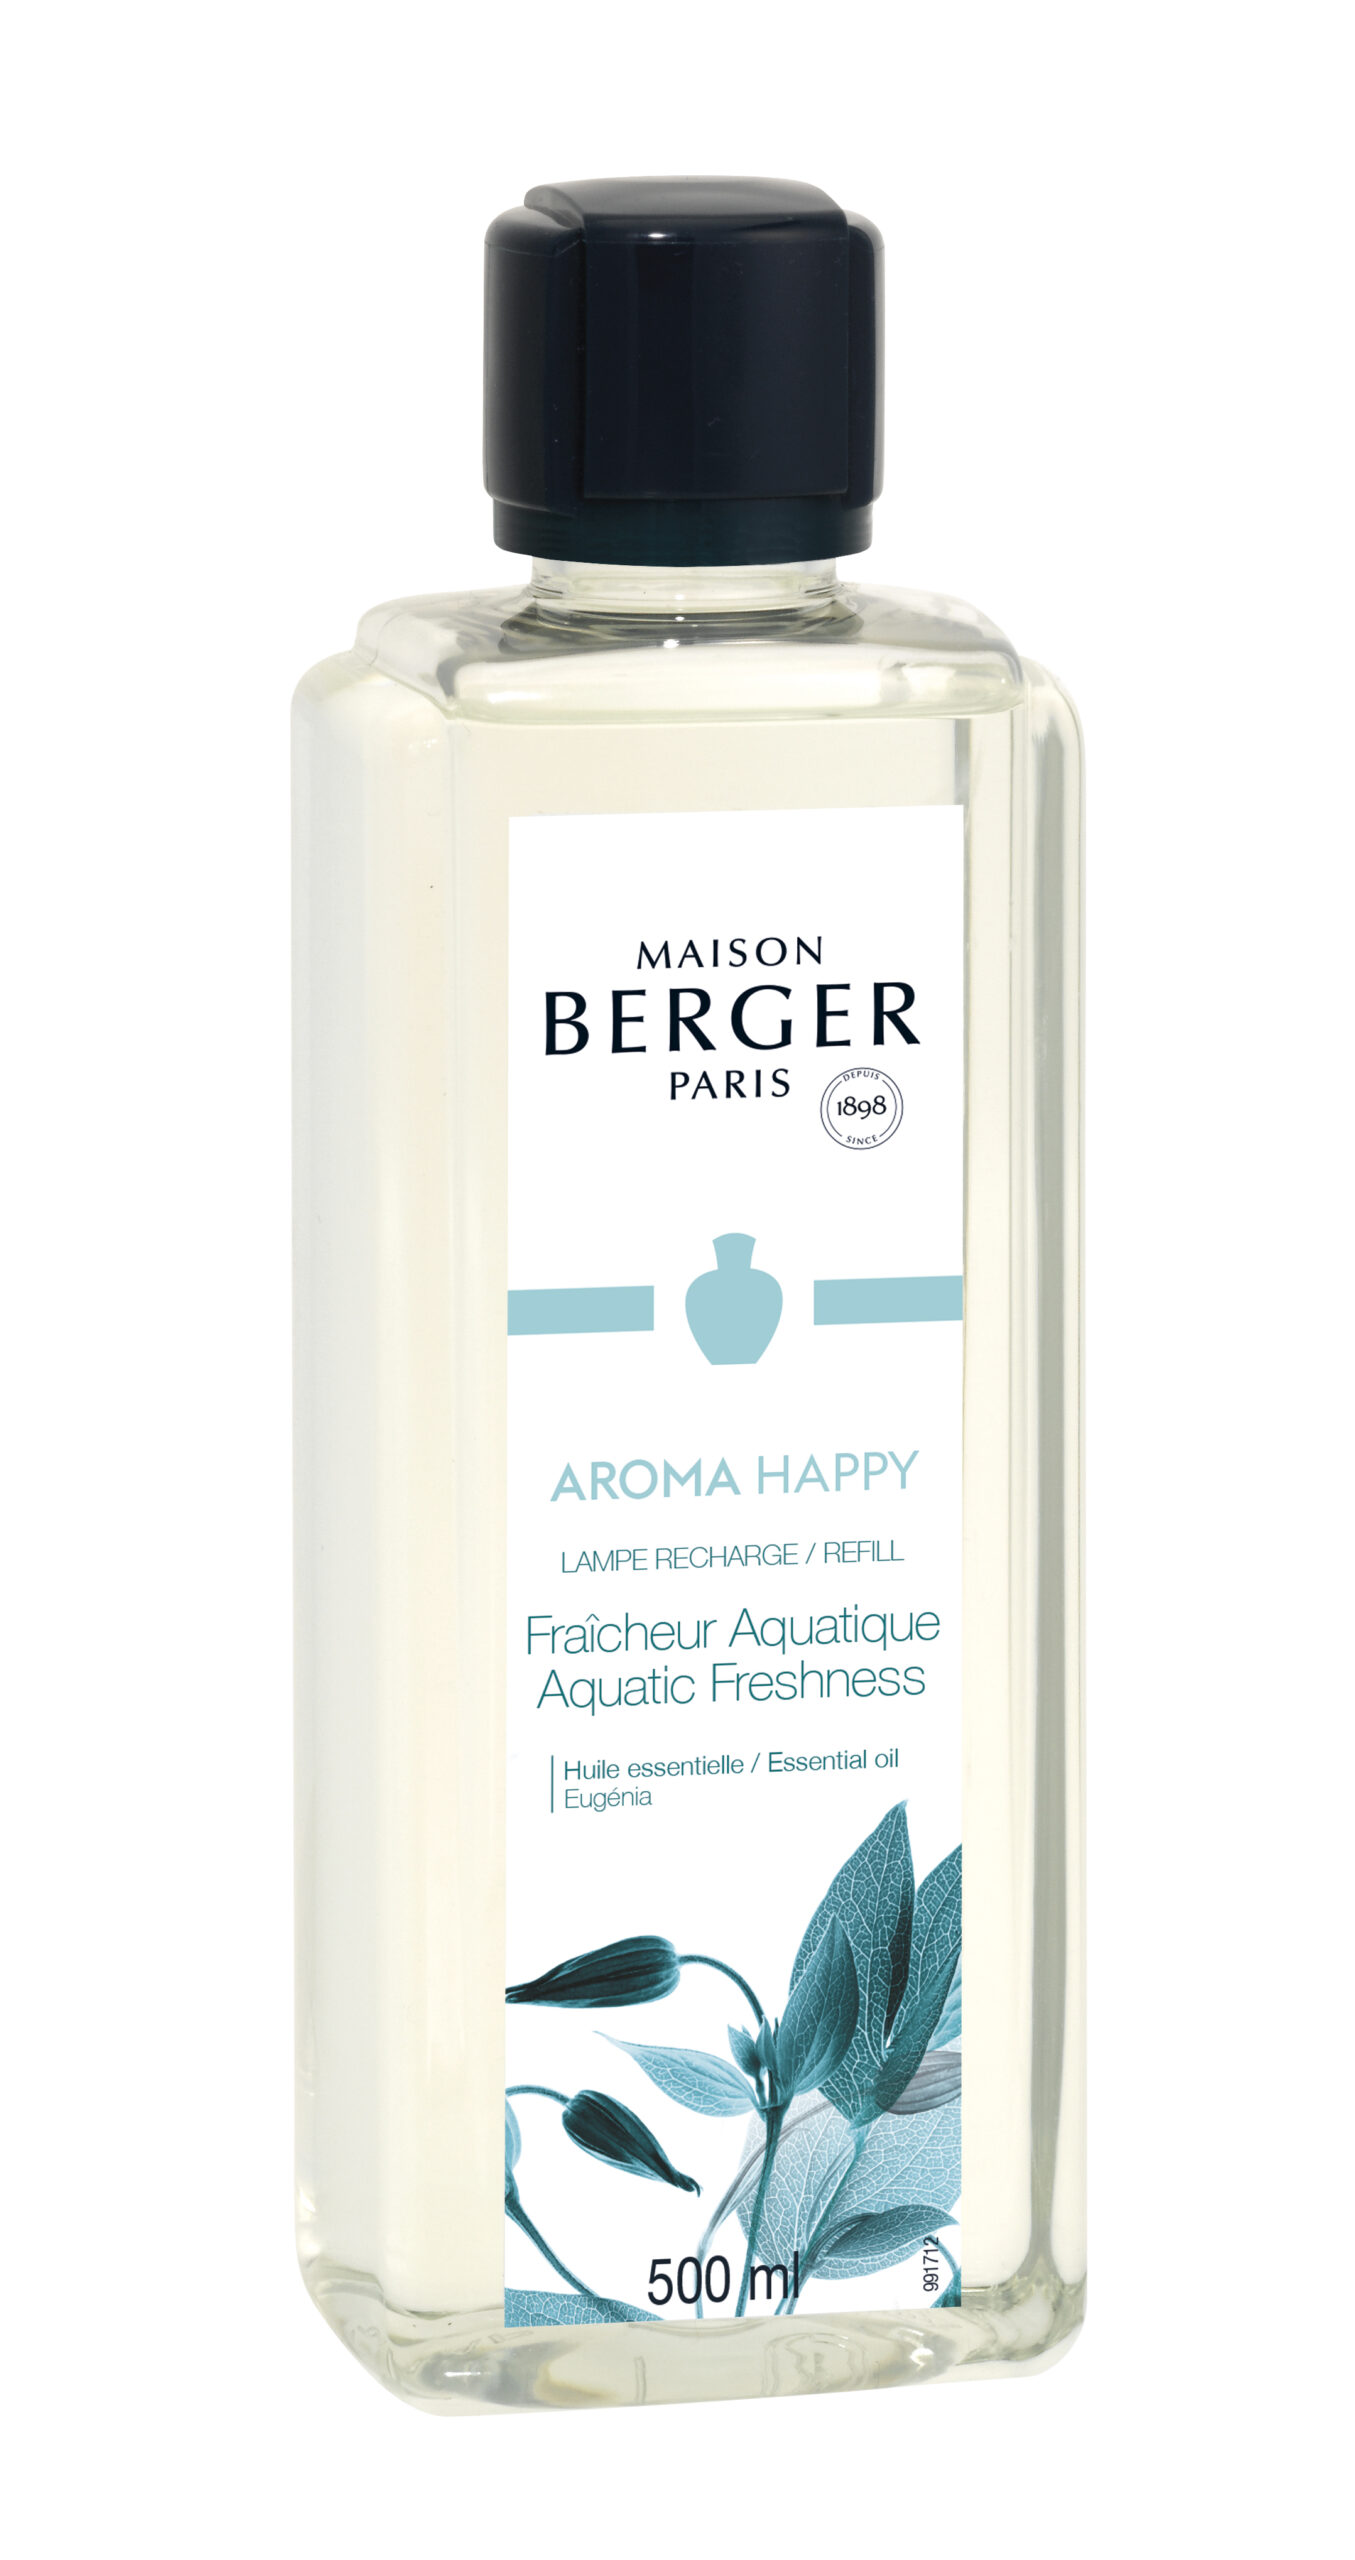 Maison Berger Paris - parfum Aroma Happy Aquatic Freshness - 500 ml